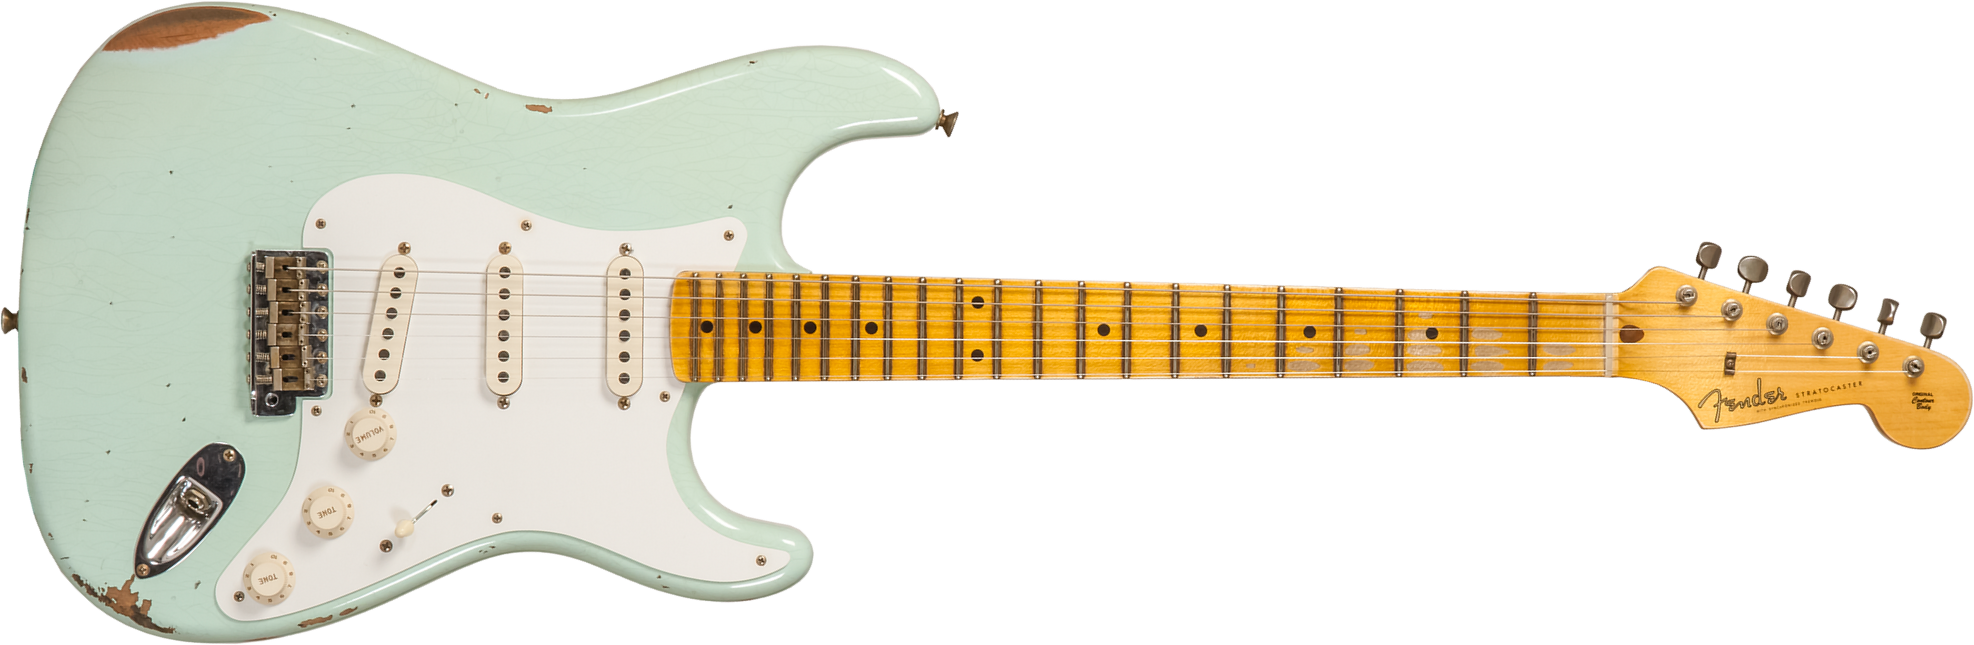 Fender Custom Shop Strat 1958 3s Trem Mn #cz572338 - Relic Aged Surf Green - Str shape electric guitar - Main picture